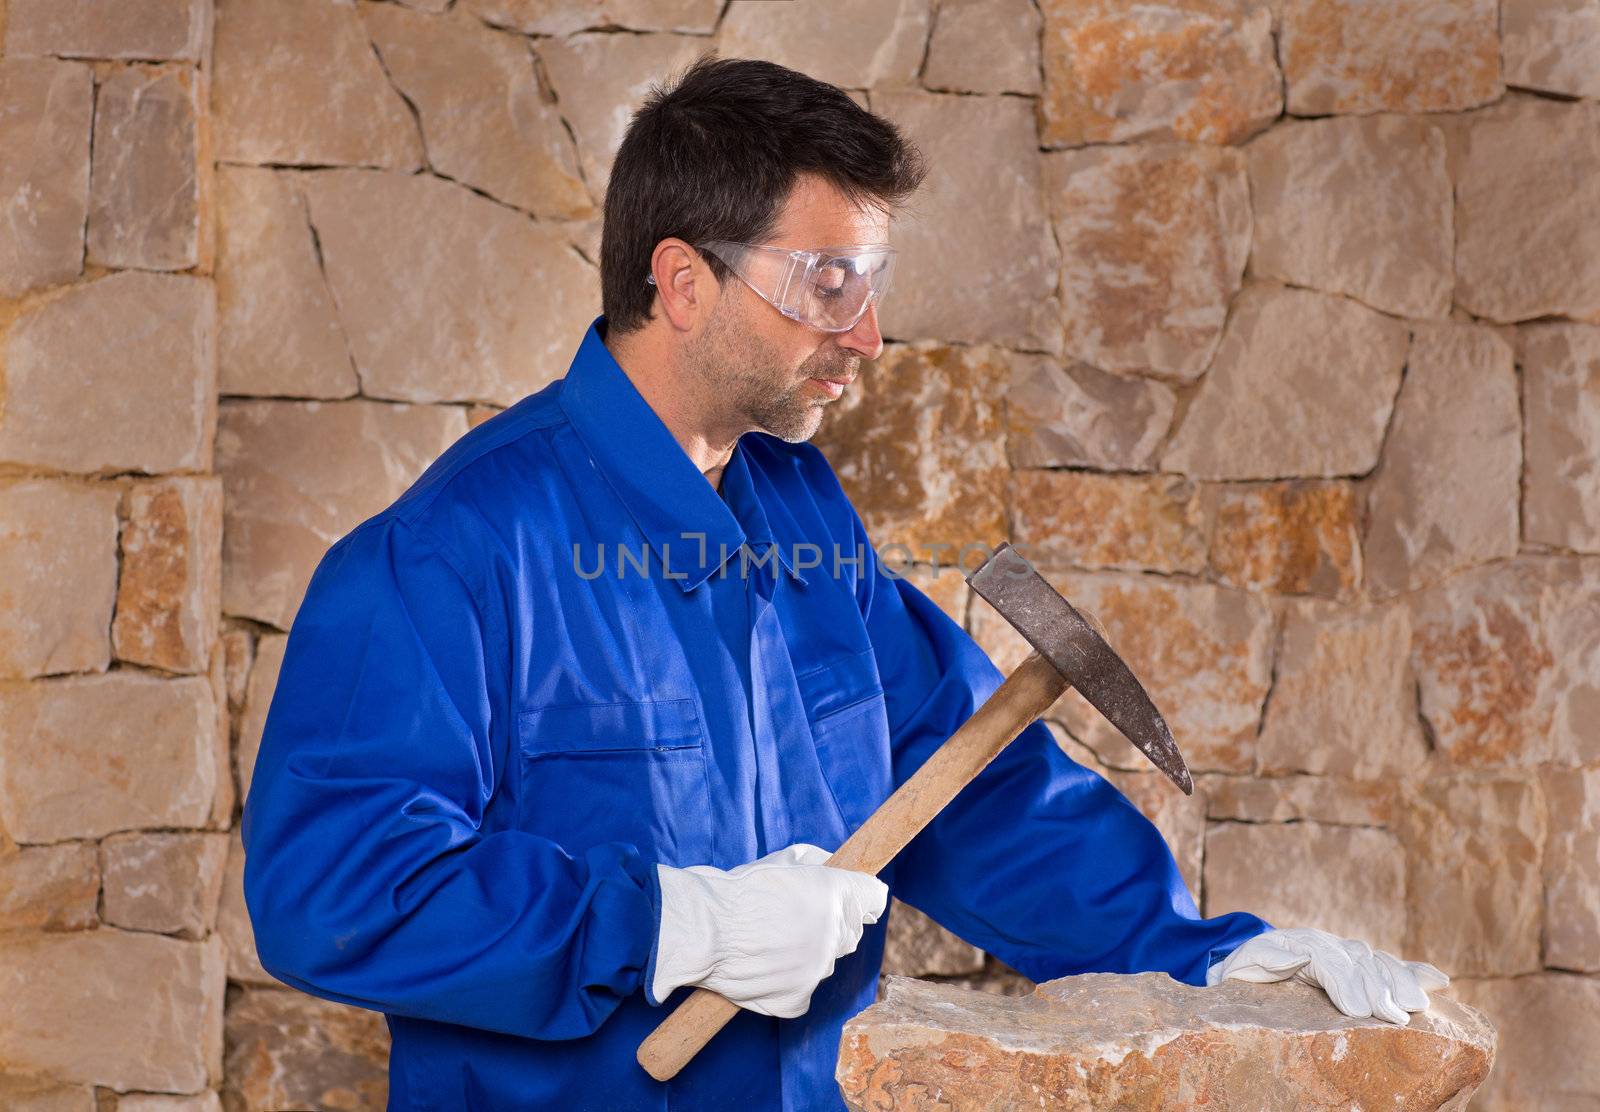 Masonry mason stonecutter man with hammer working on stone wall construction